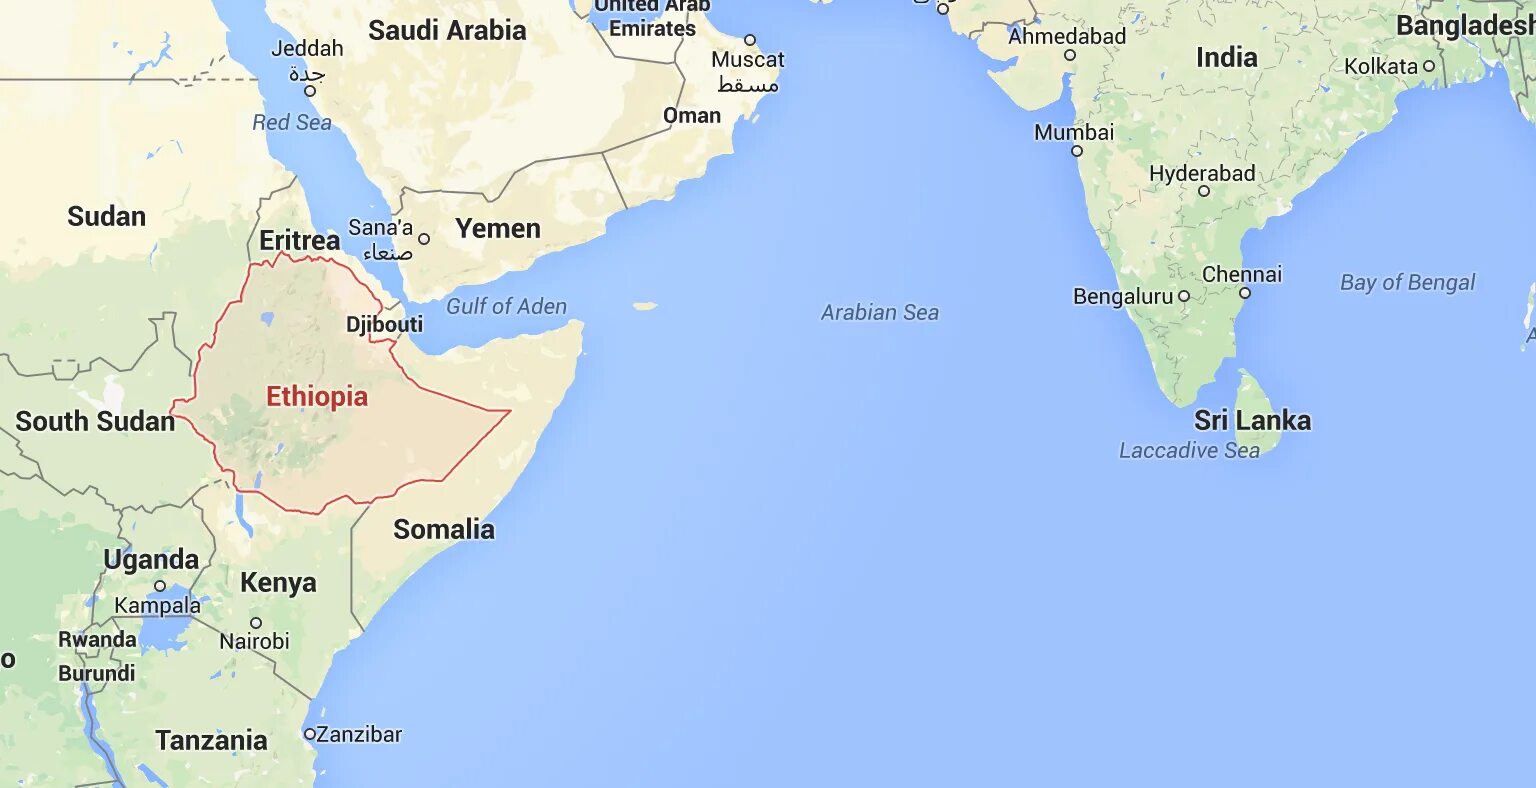 Аравийский какой океан. Аравийское море на карте. Аравийский полуостров на карте индийского океана. Границы Аравийского моря на карте.